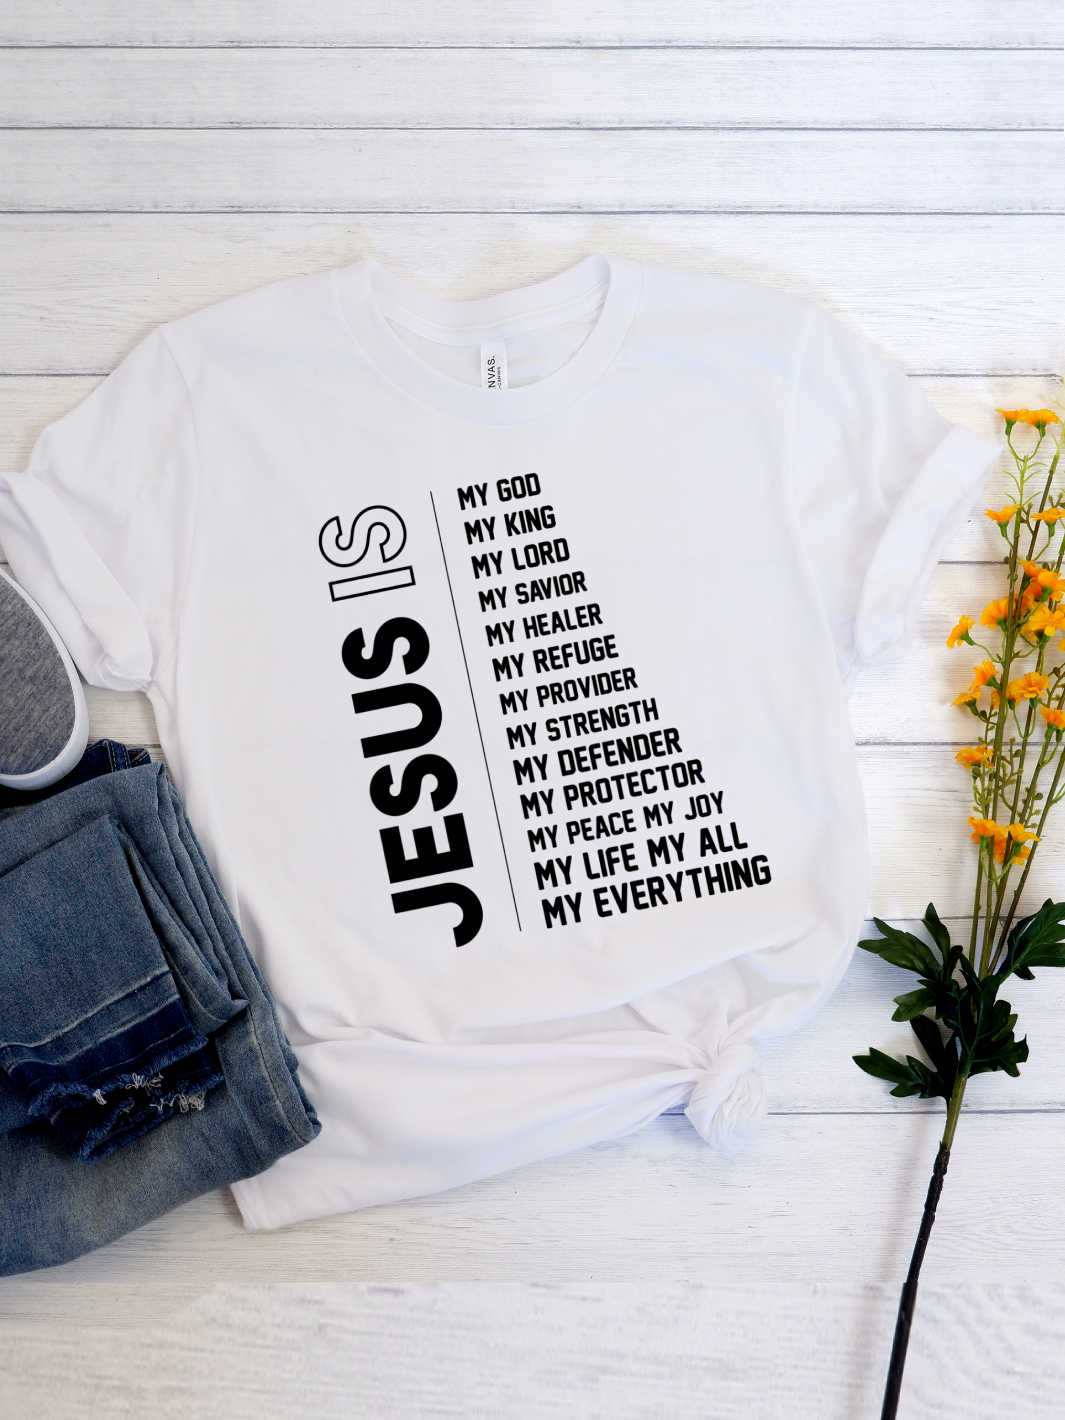 Christian t-shirts